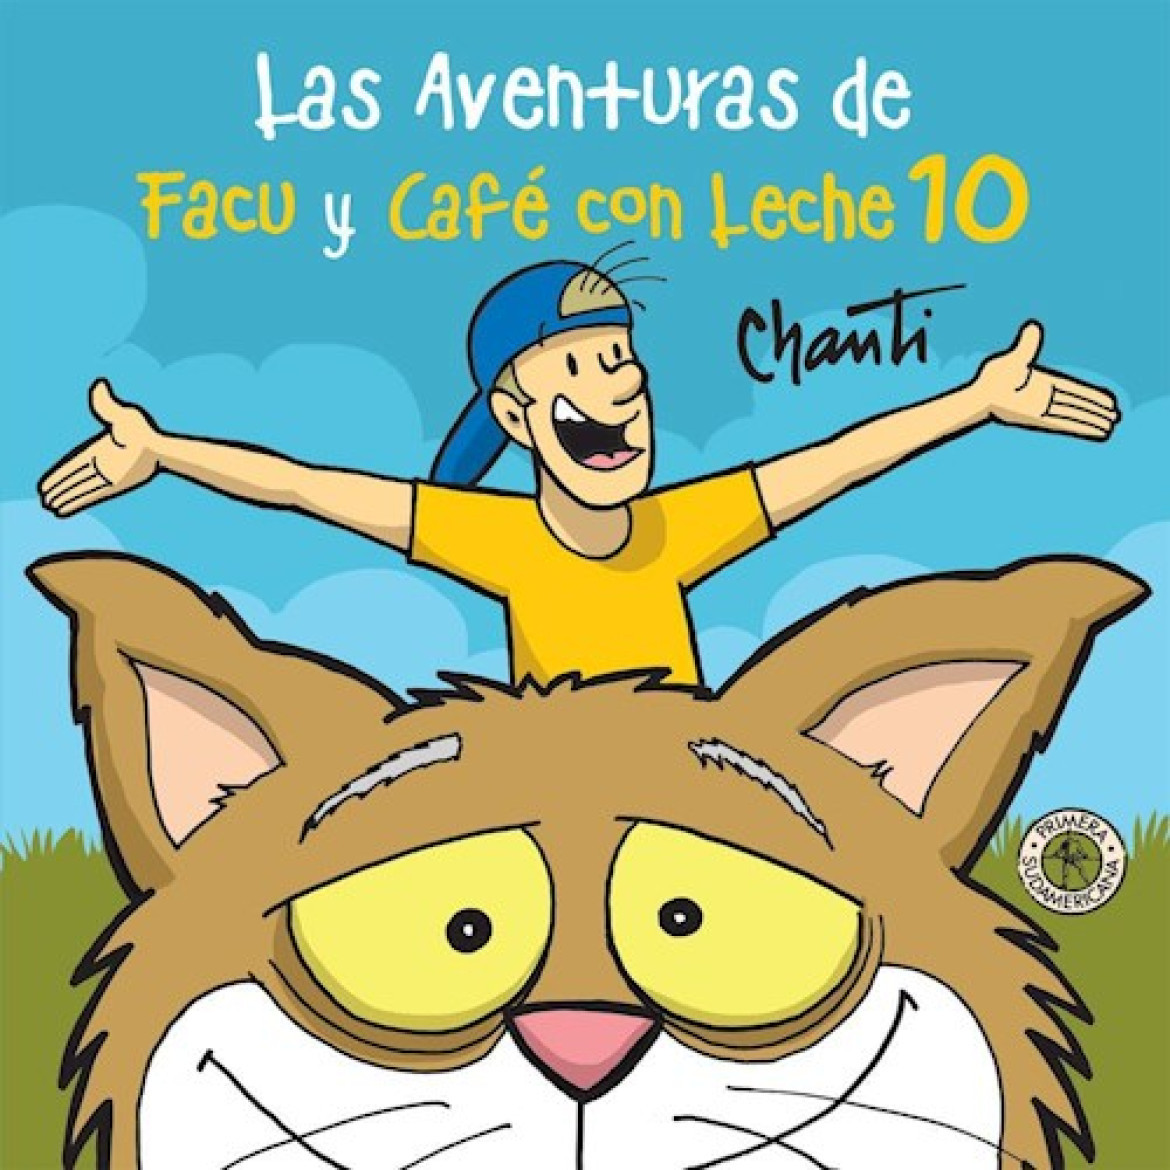 Portada del libro infantil "Las Aventuras de Facu t Café con Leche 10". Foto: Penguin Random House.